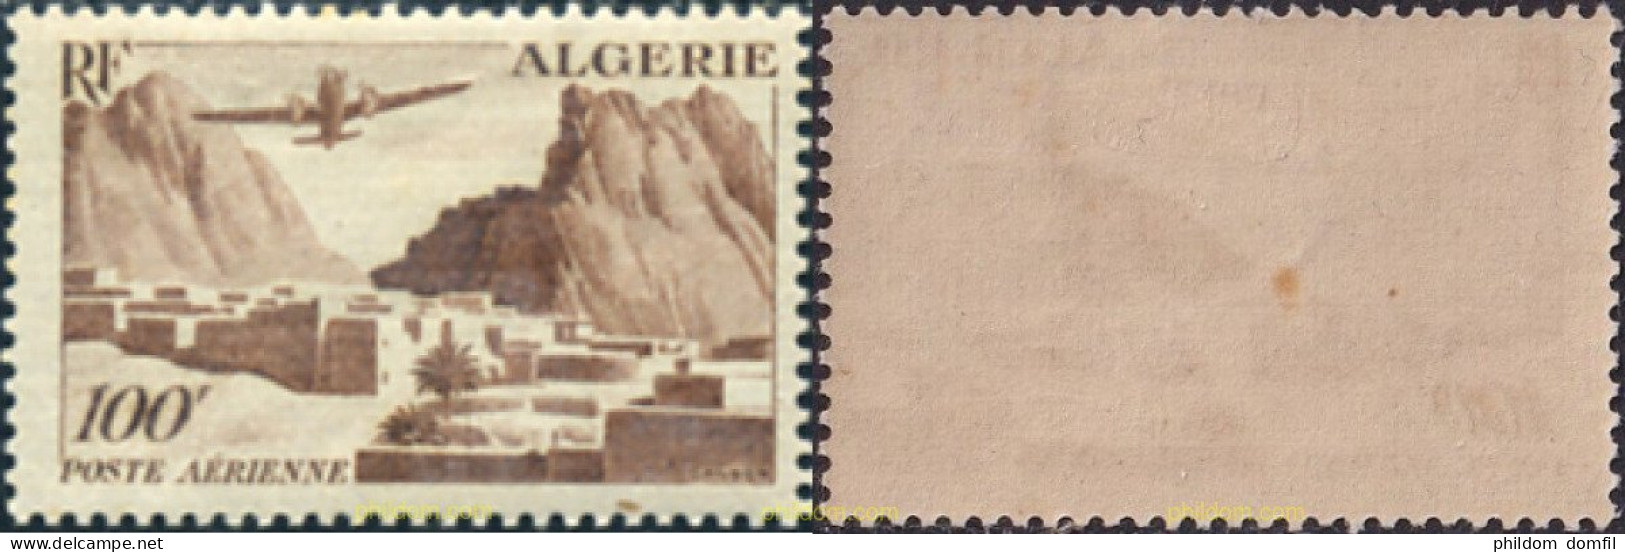 725427 HINGED ARGELIA 1949 MOTIVOS VARIOS - Algerien (1962-...)